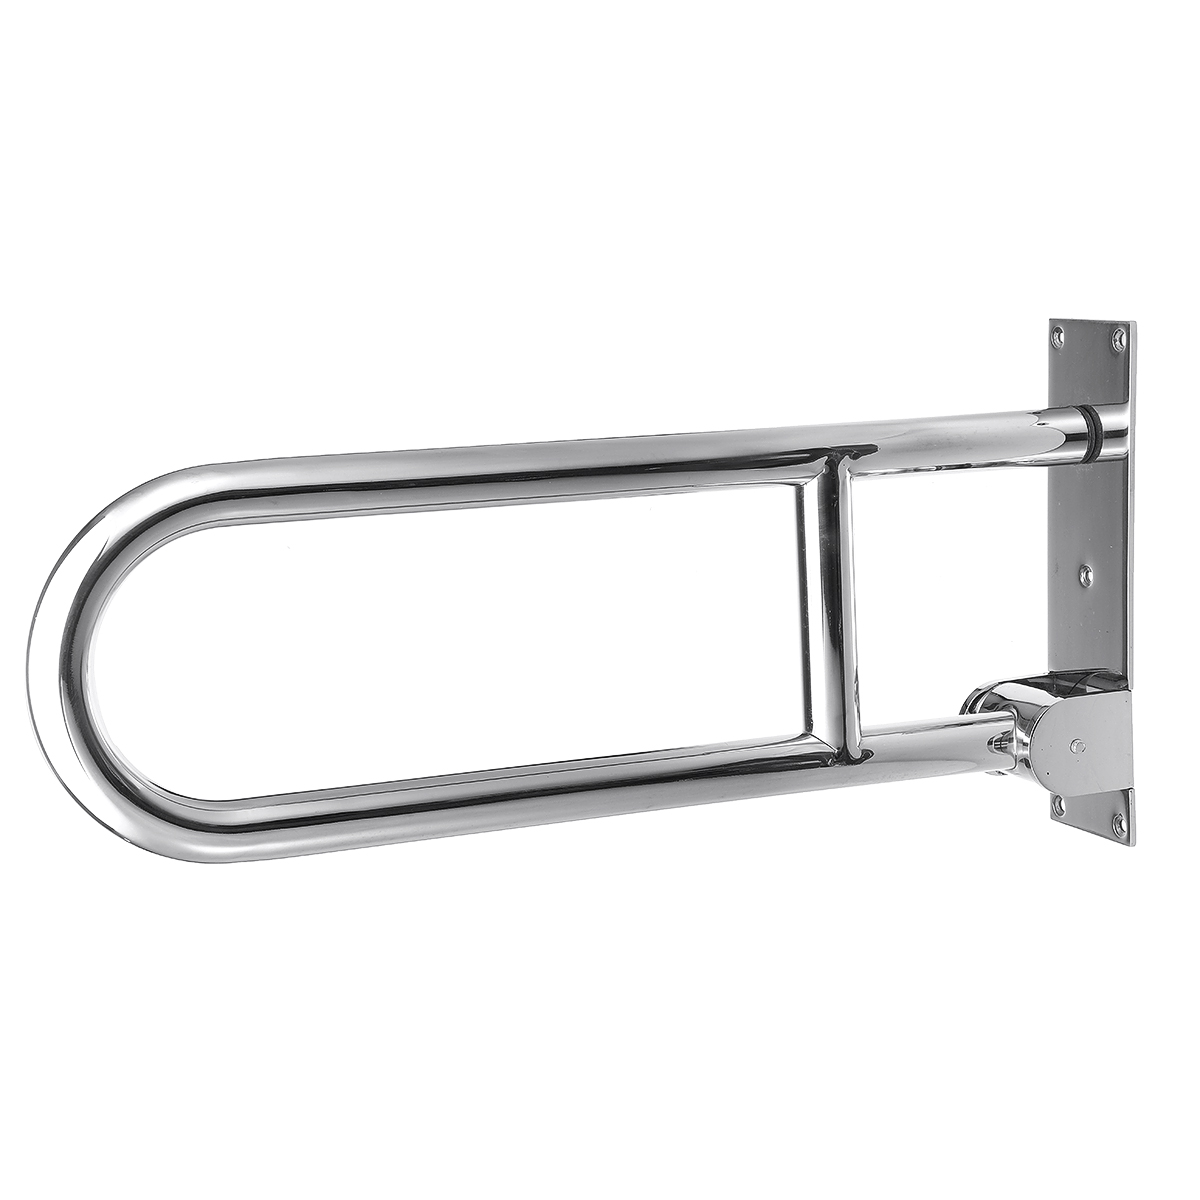 Stainless-Steel-Toilet-Safety-Frame-Rail-Grab-Bar-Handicap-Bathroom-Hand-Grips-1650108-7